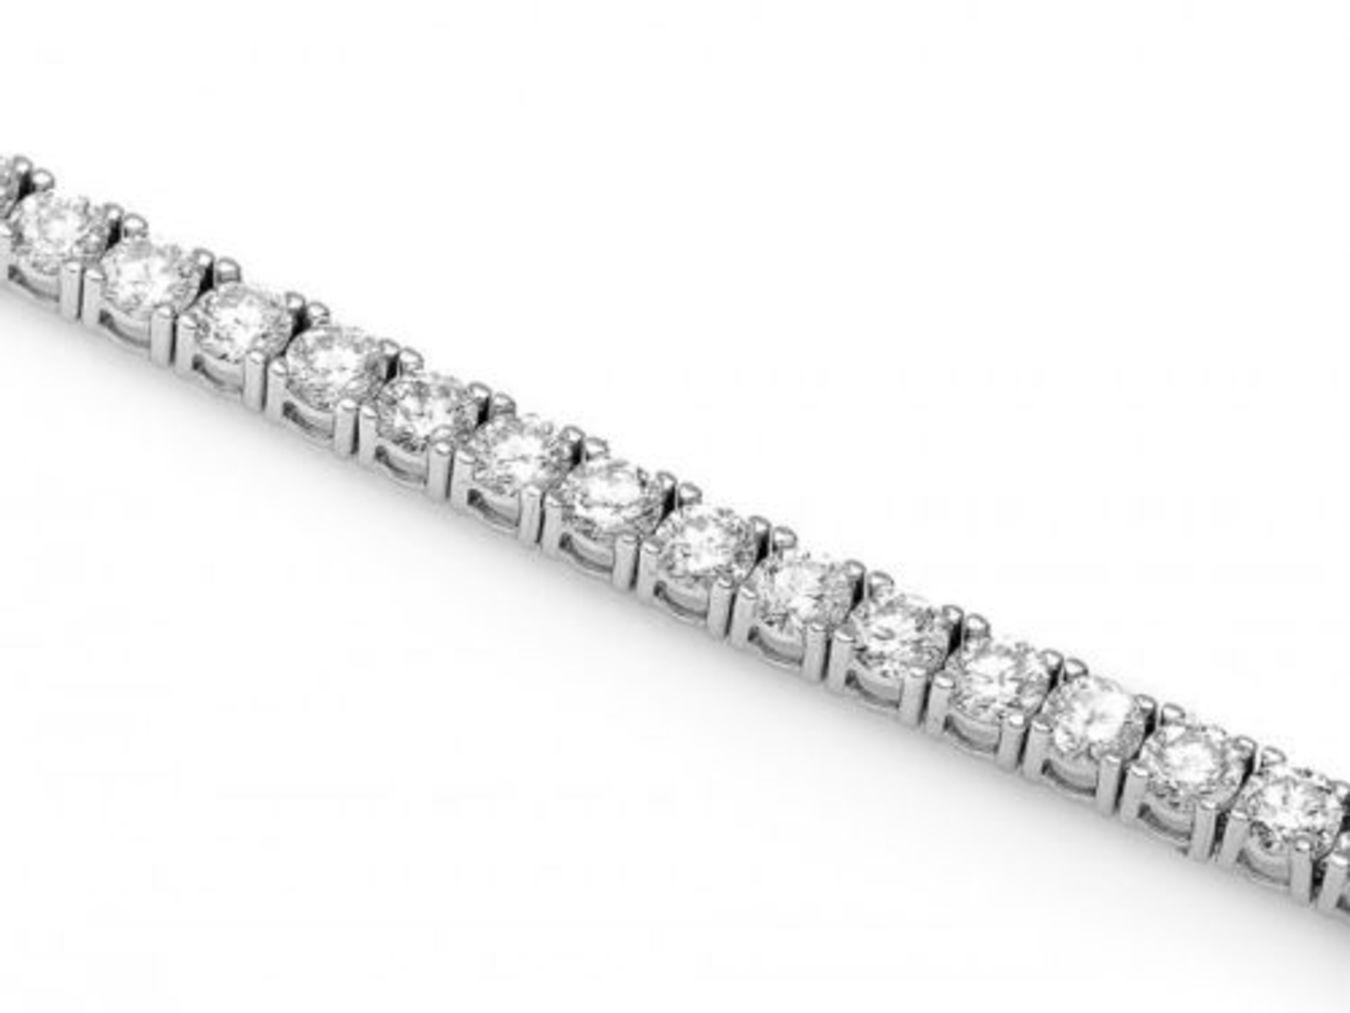 18K Gold 4.56ct Diamond Bracelet